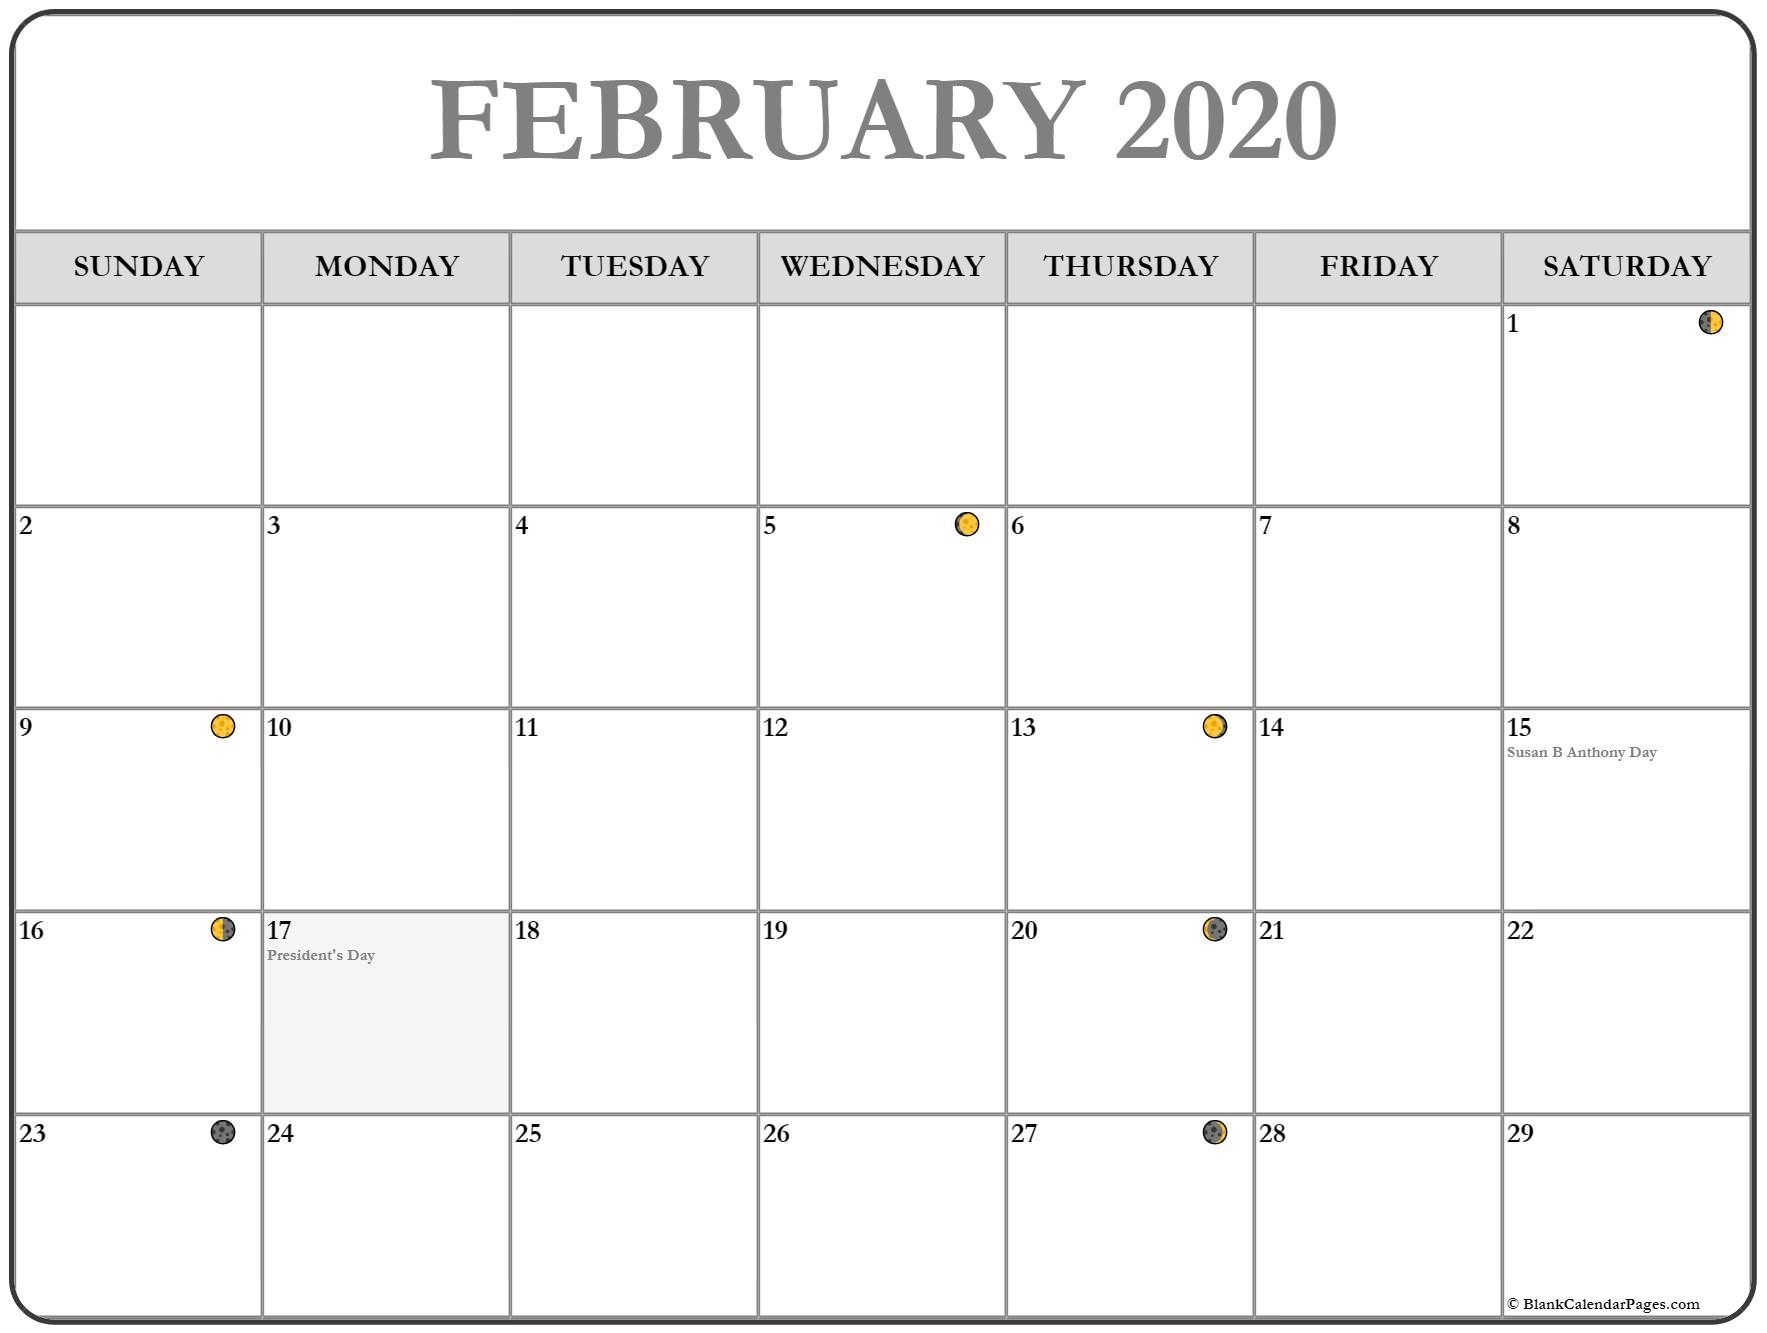 February 2020 Lunar Calendar | Moon Phase Calendar  Lunar And Solar Calendar 2020